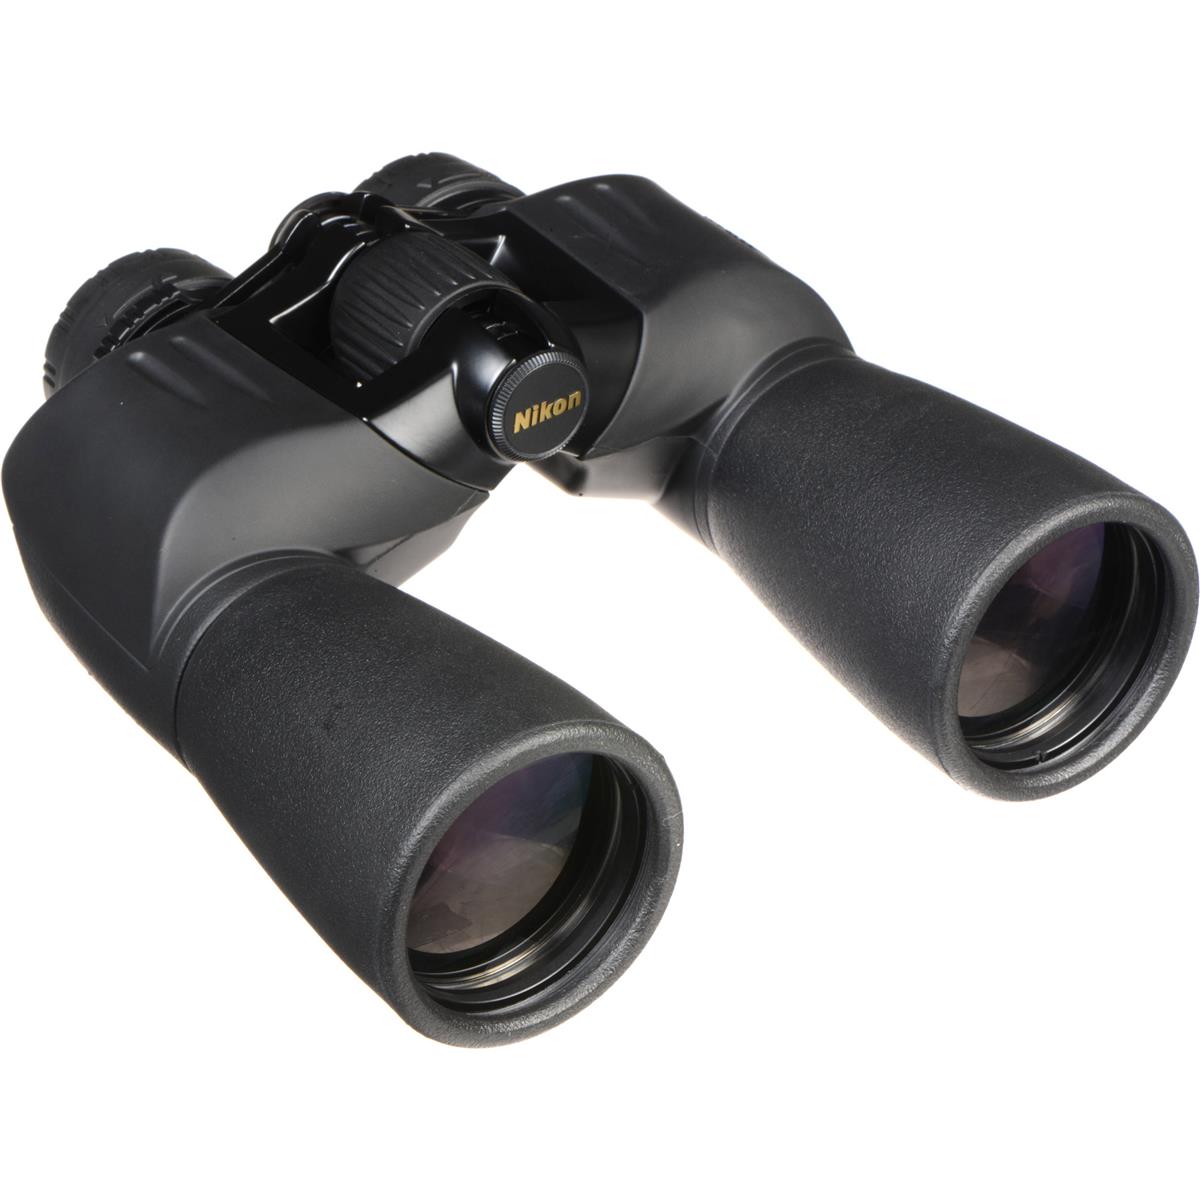 Nikon 16x50 Action Extreme ATB Binocular with 3.5 Degree Angle of View, Black -  7247